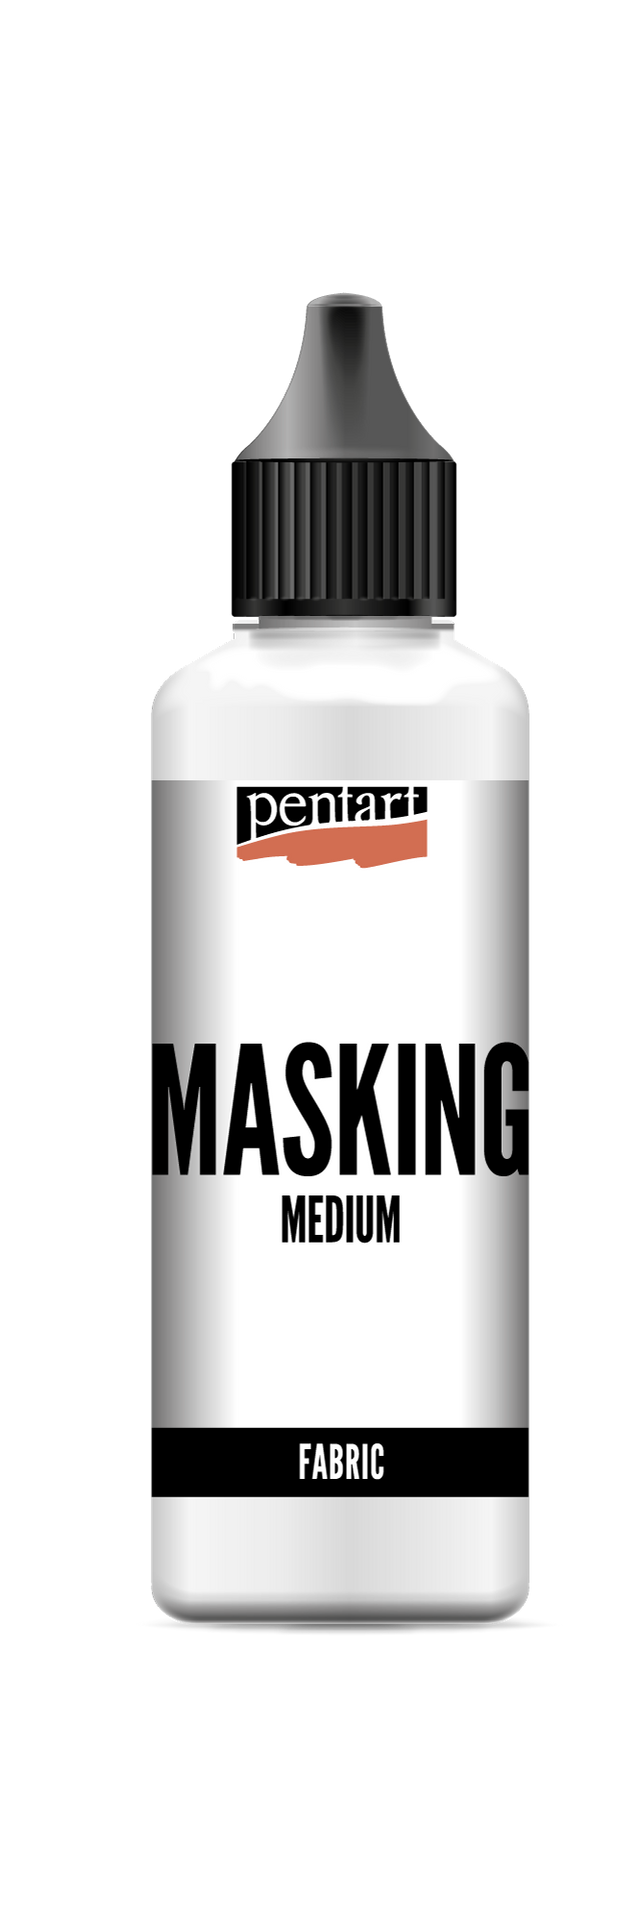 Pentart Fabric Masking Medium